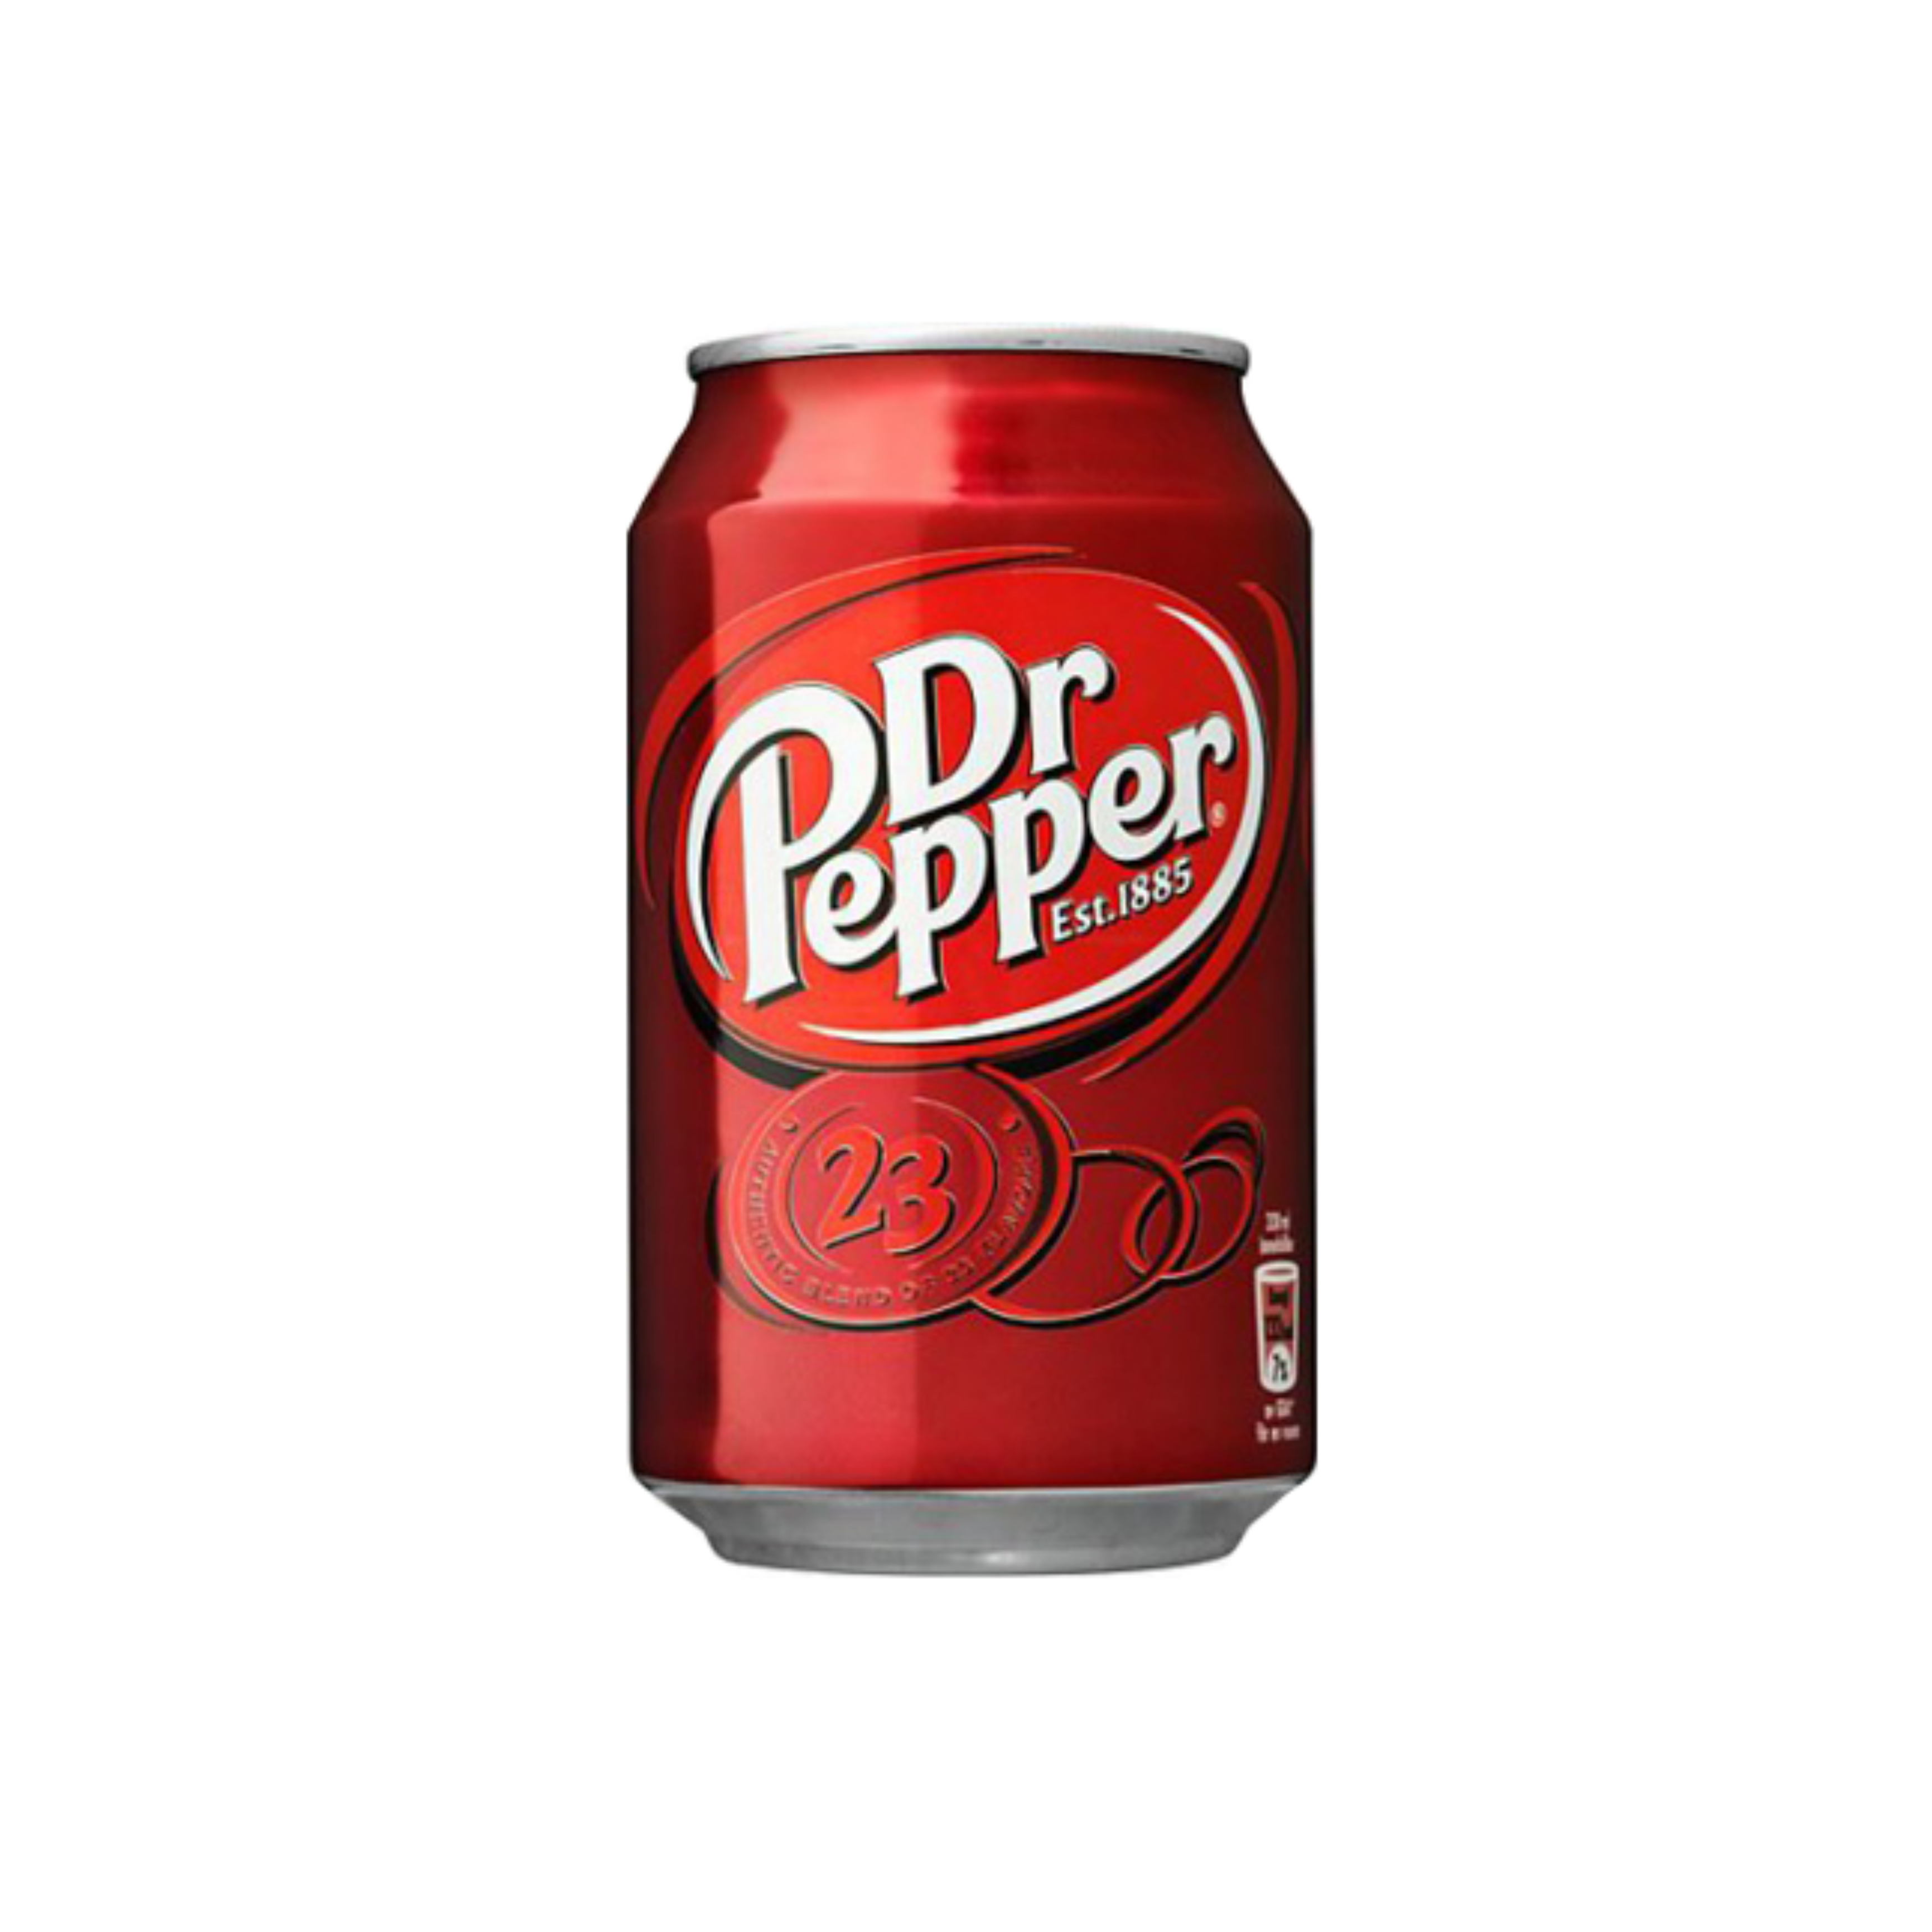 Https pepper. Доктор Пеппер. Доктор Пеппер 90-е. Доктор Пеппер напиток. Доктор Пеппер на белом фоне.